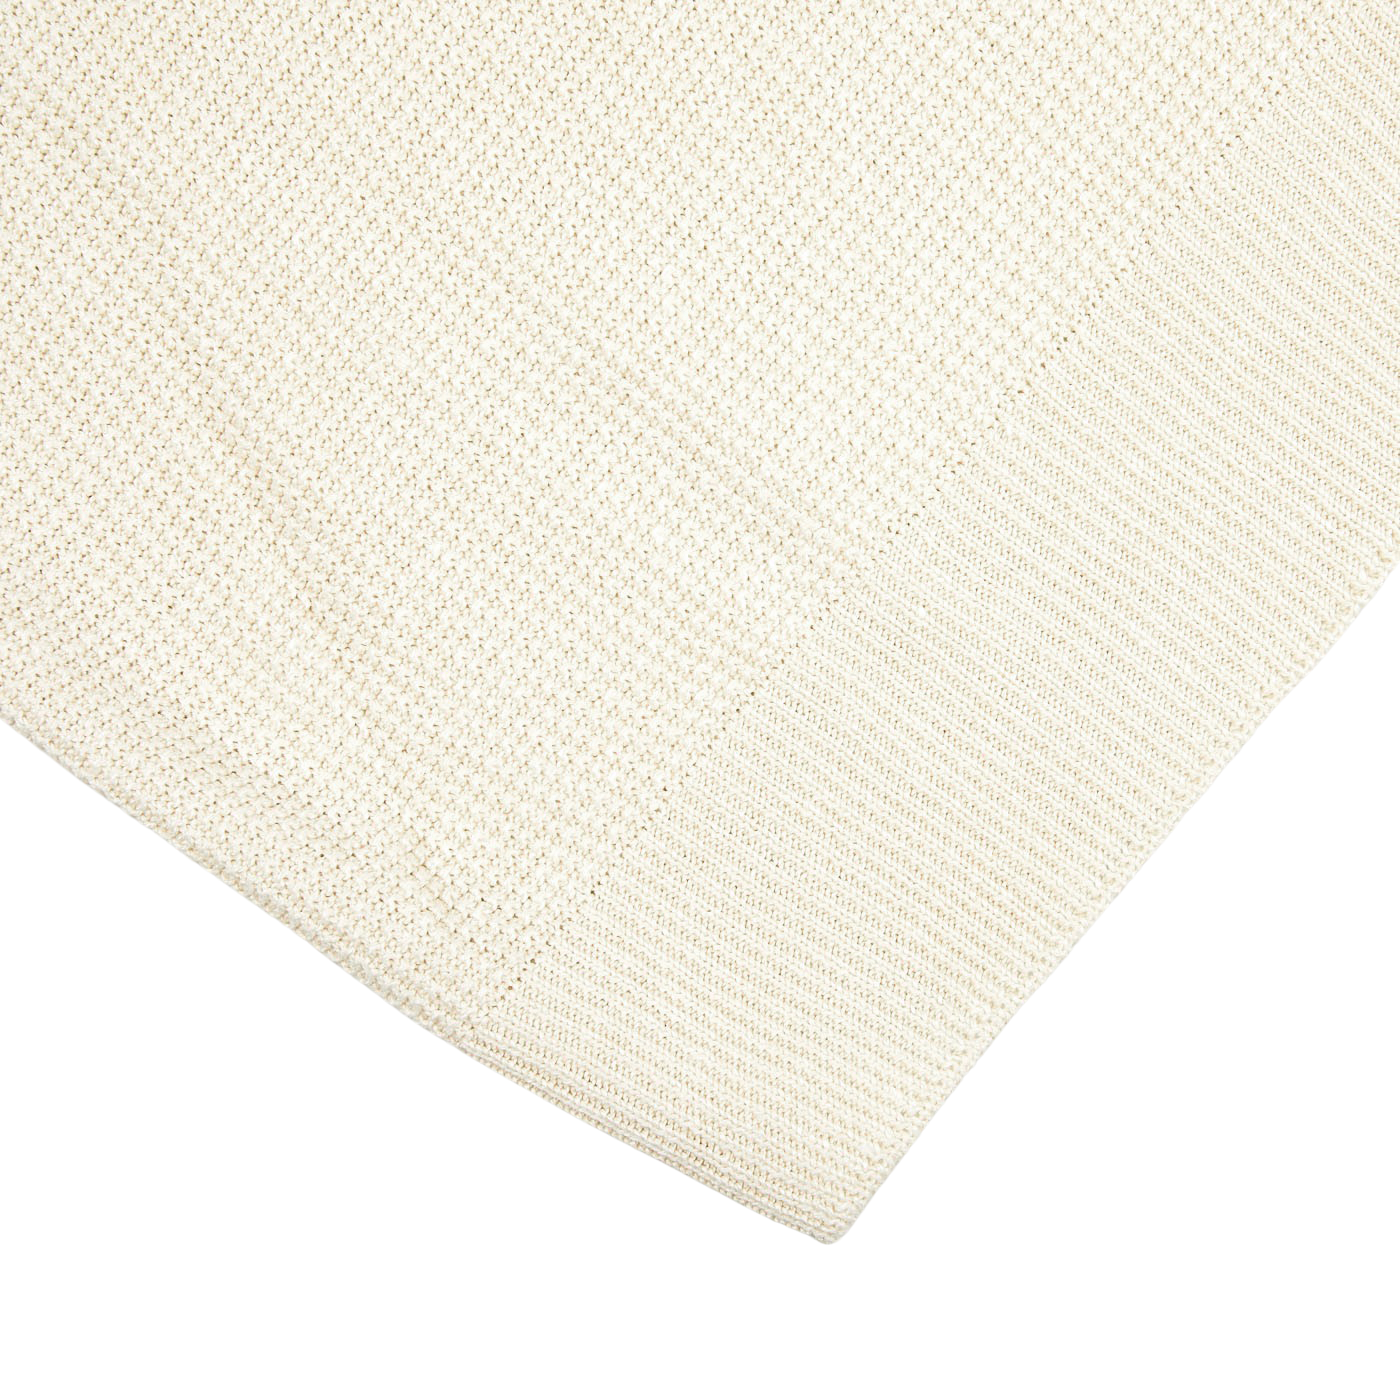 A Gran Sasso Cream Beige Cotton Linen Polo Shirt on a white surface.